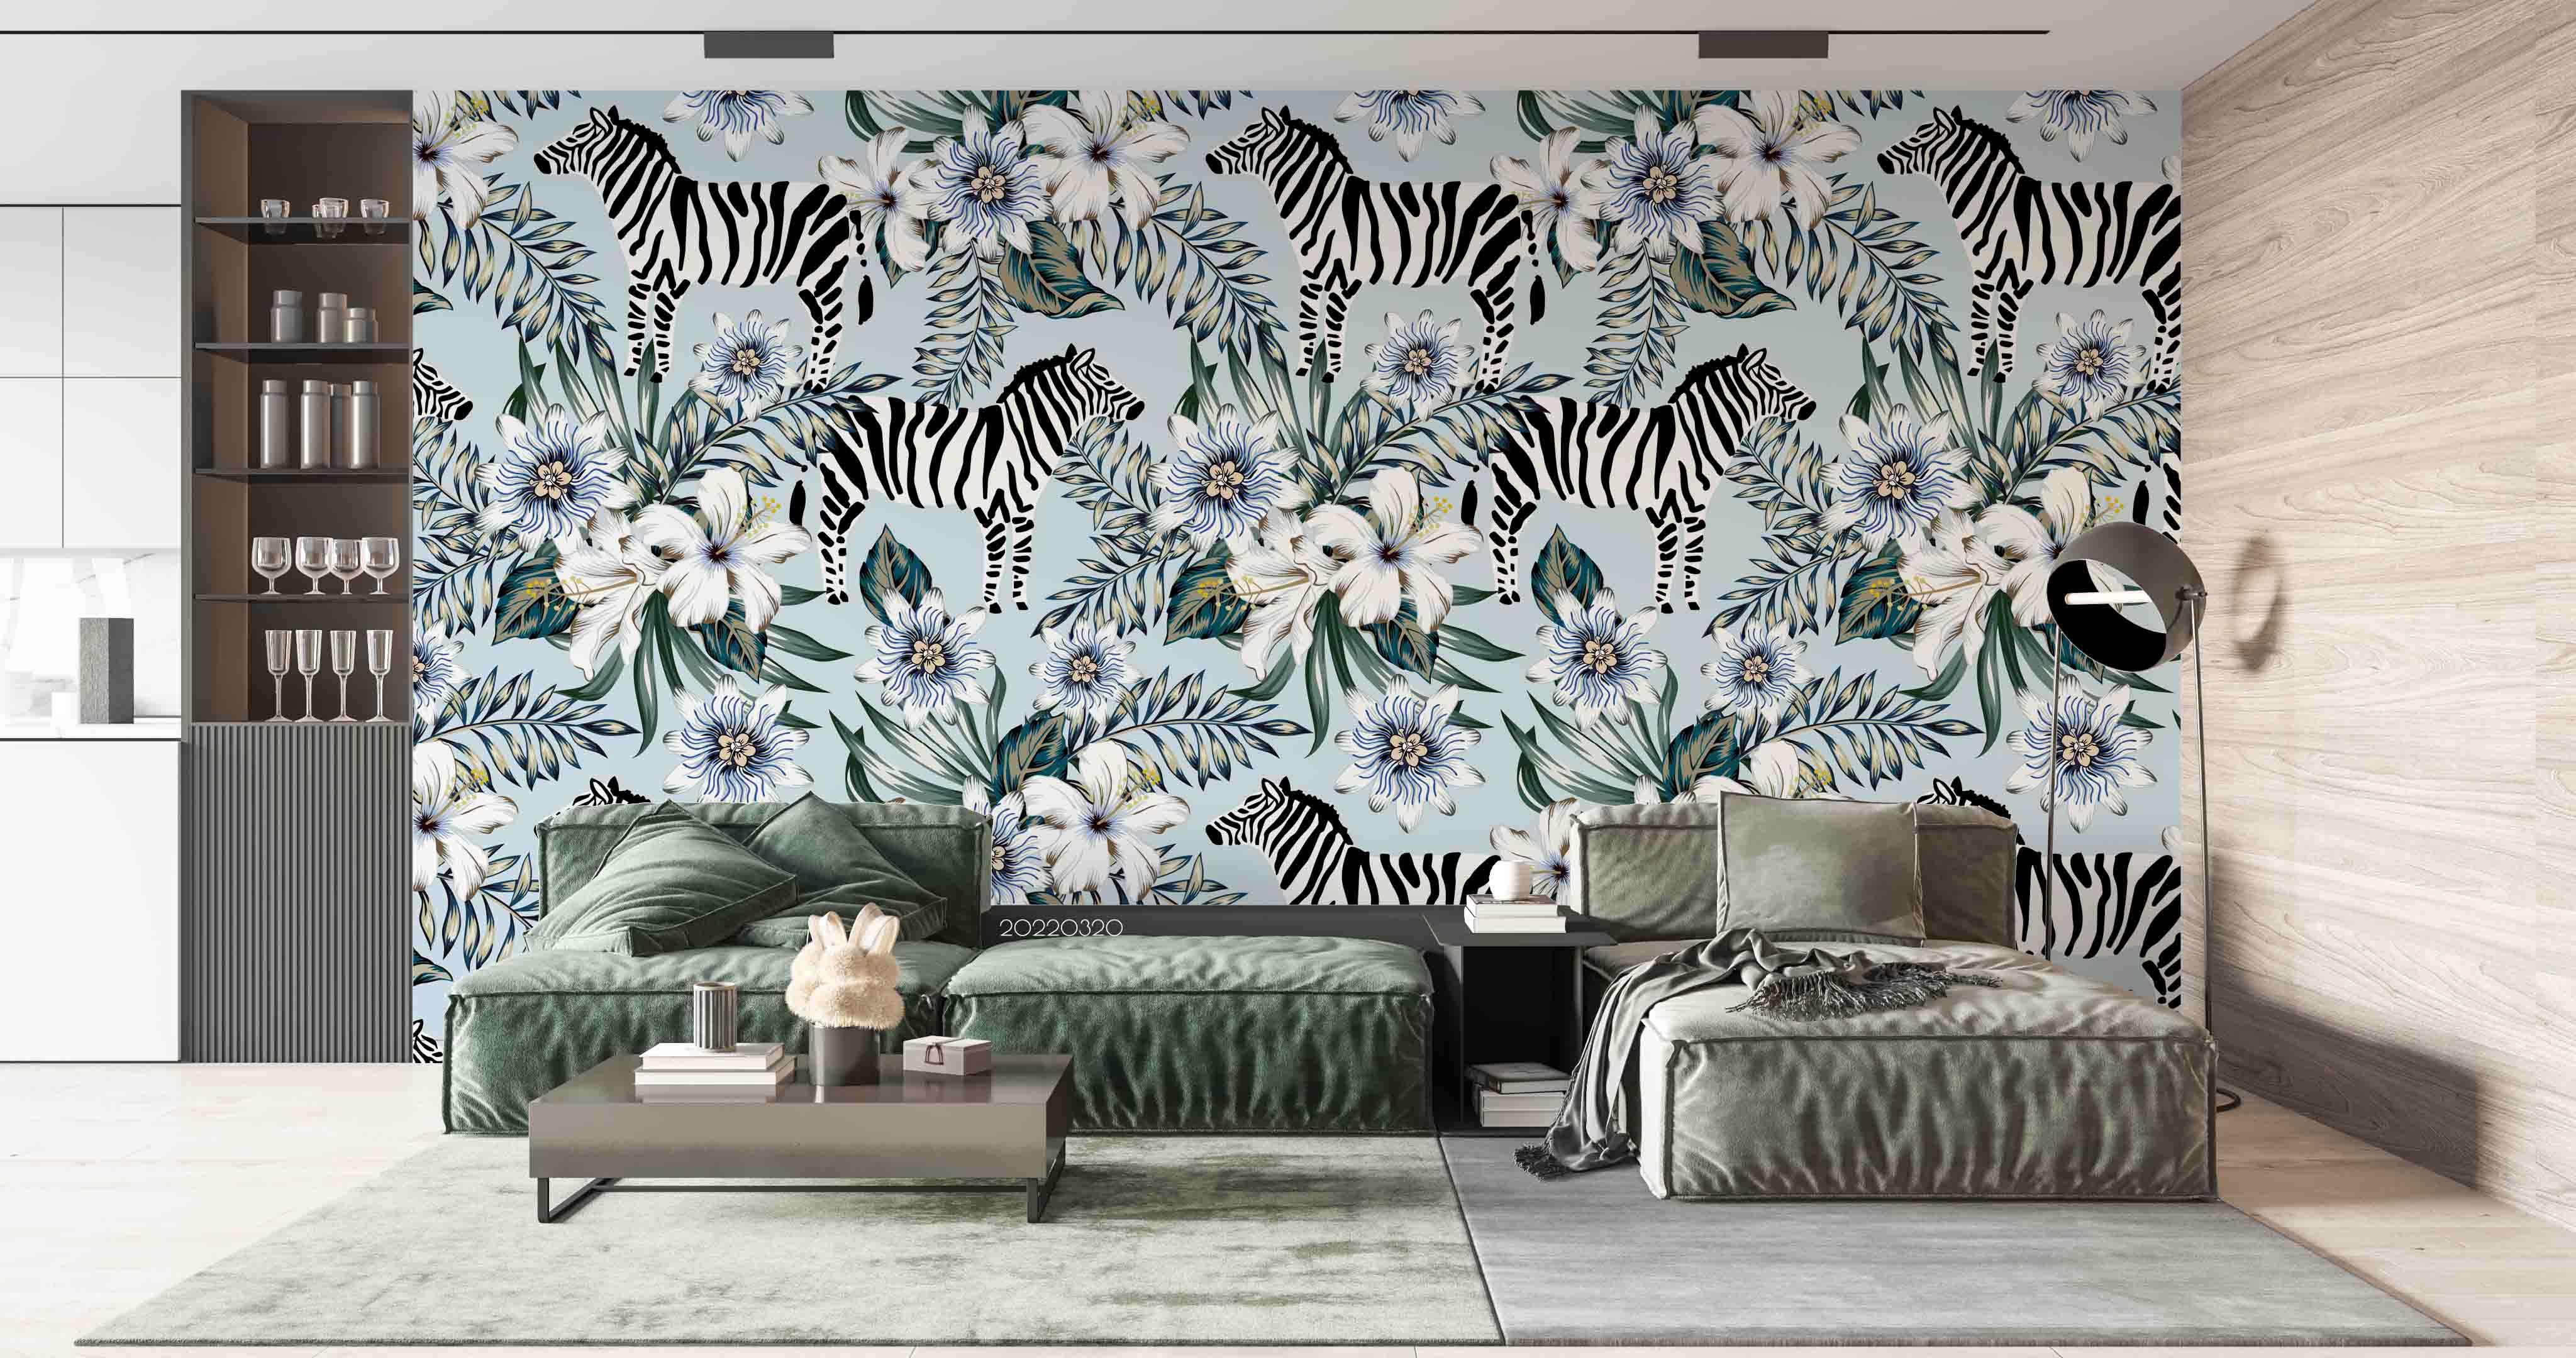 3D Vintage Floral Zebra Pattern Wall Mural Wallpaper GD 3713- Jess Art Decoration